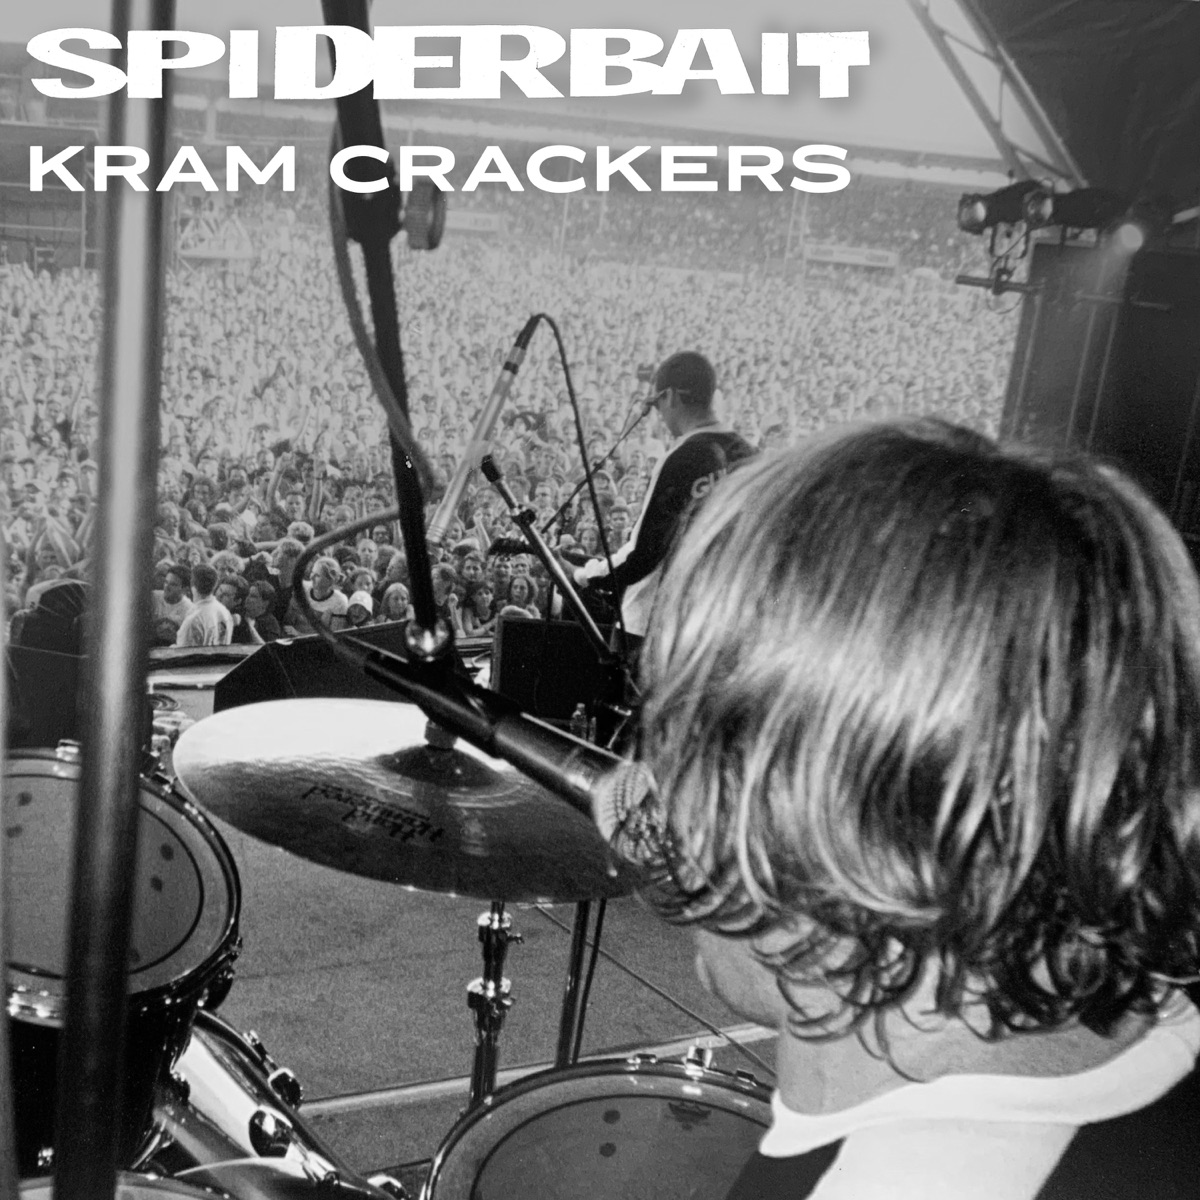 Kram Crackers - EP - Album by Spiderbait - Apple Music